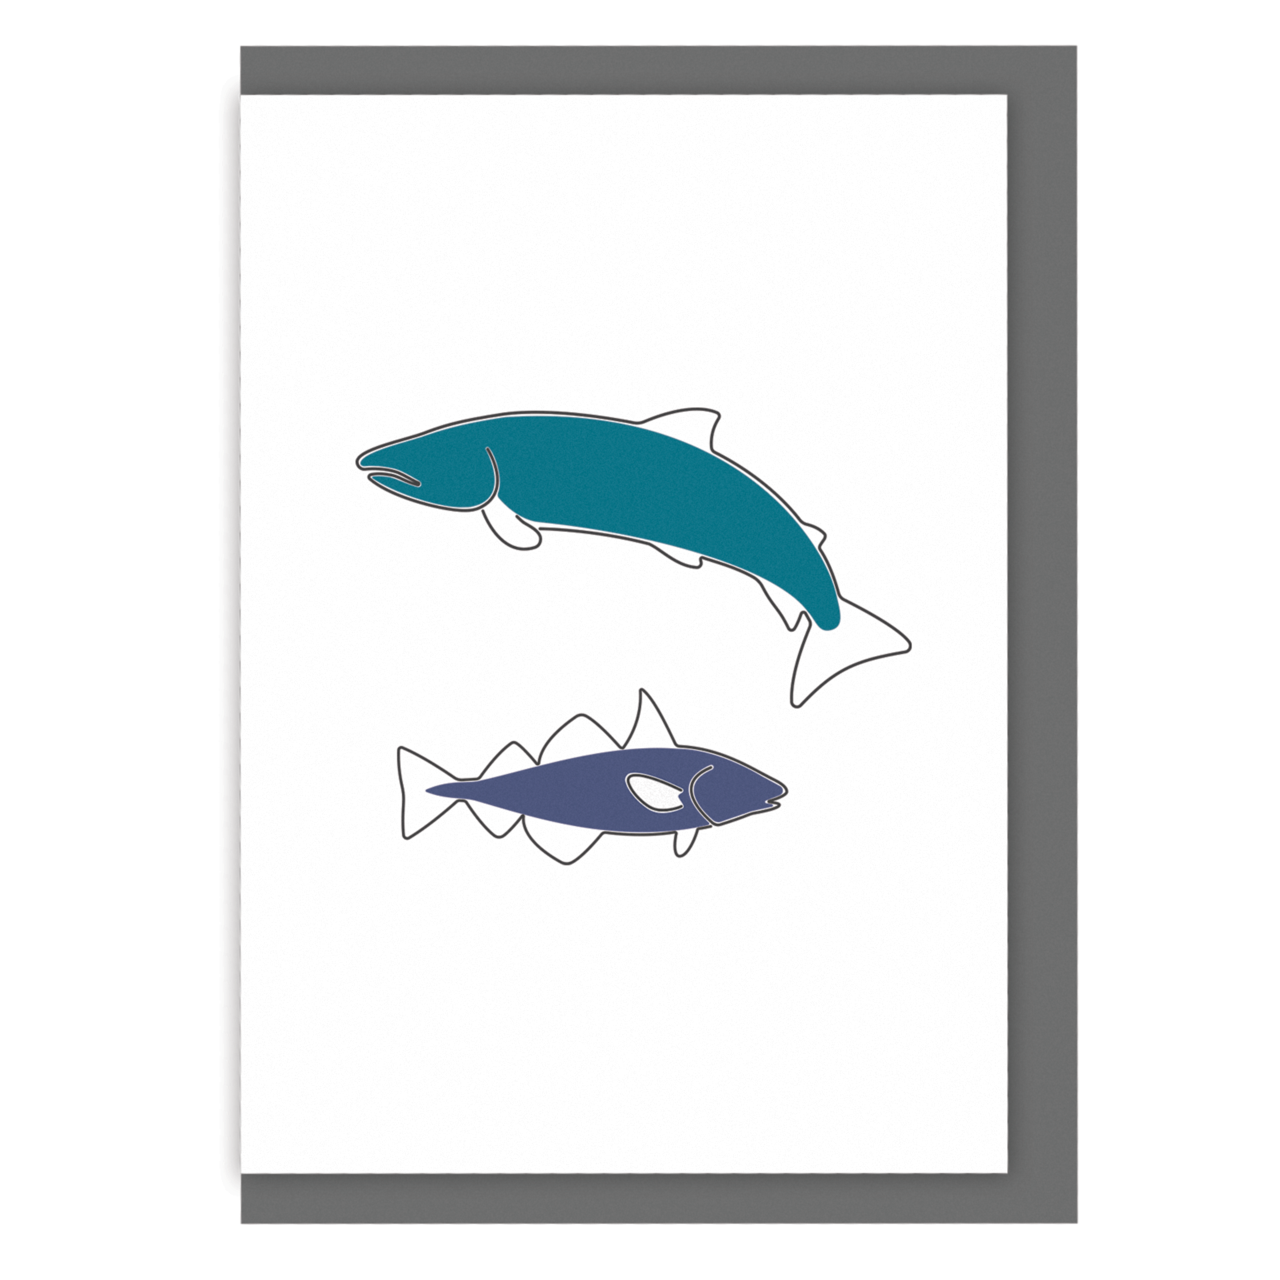 Fishing greetings card fish illustration